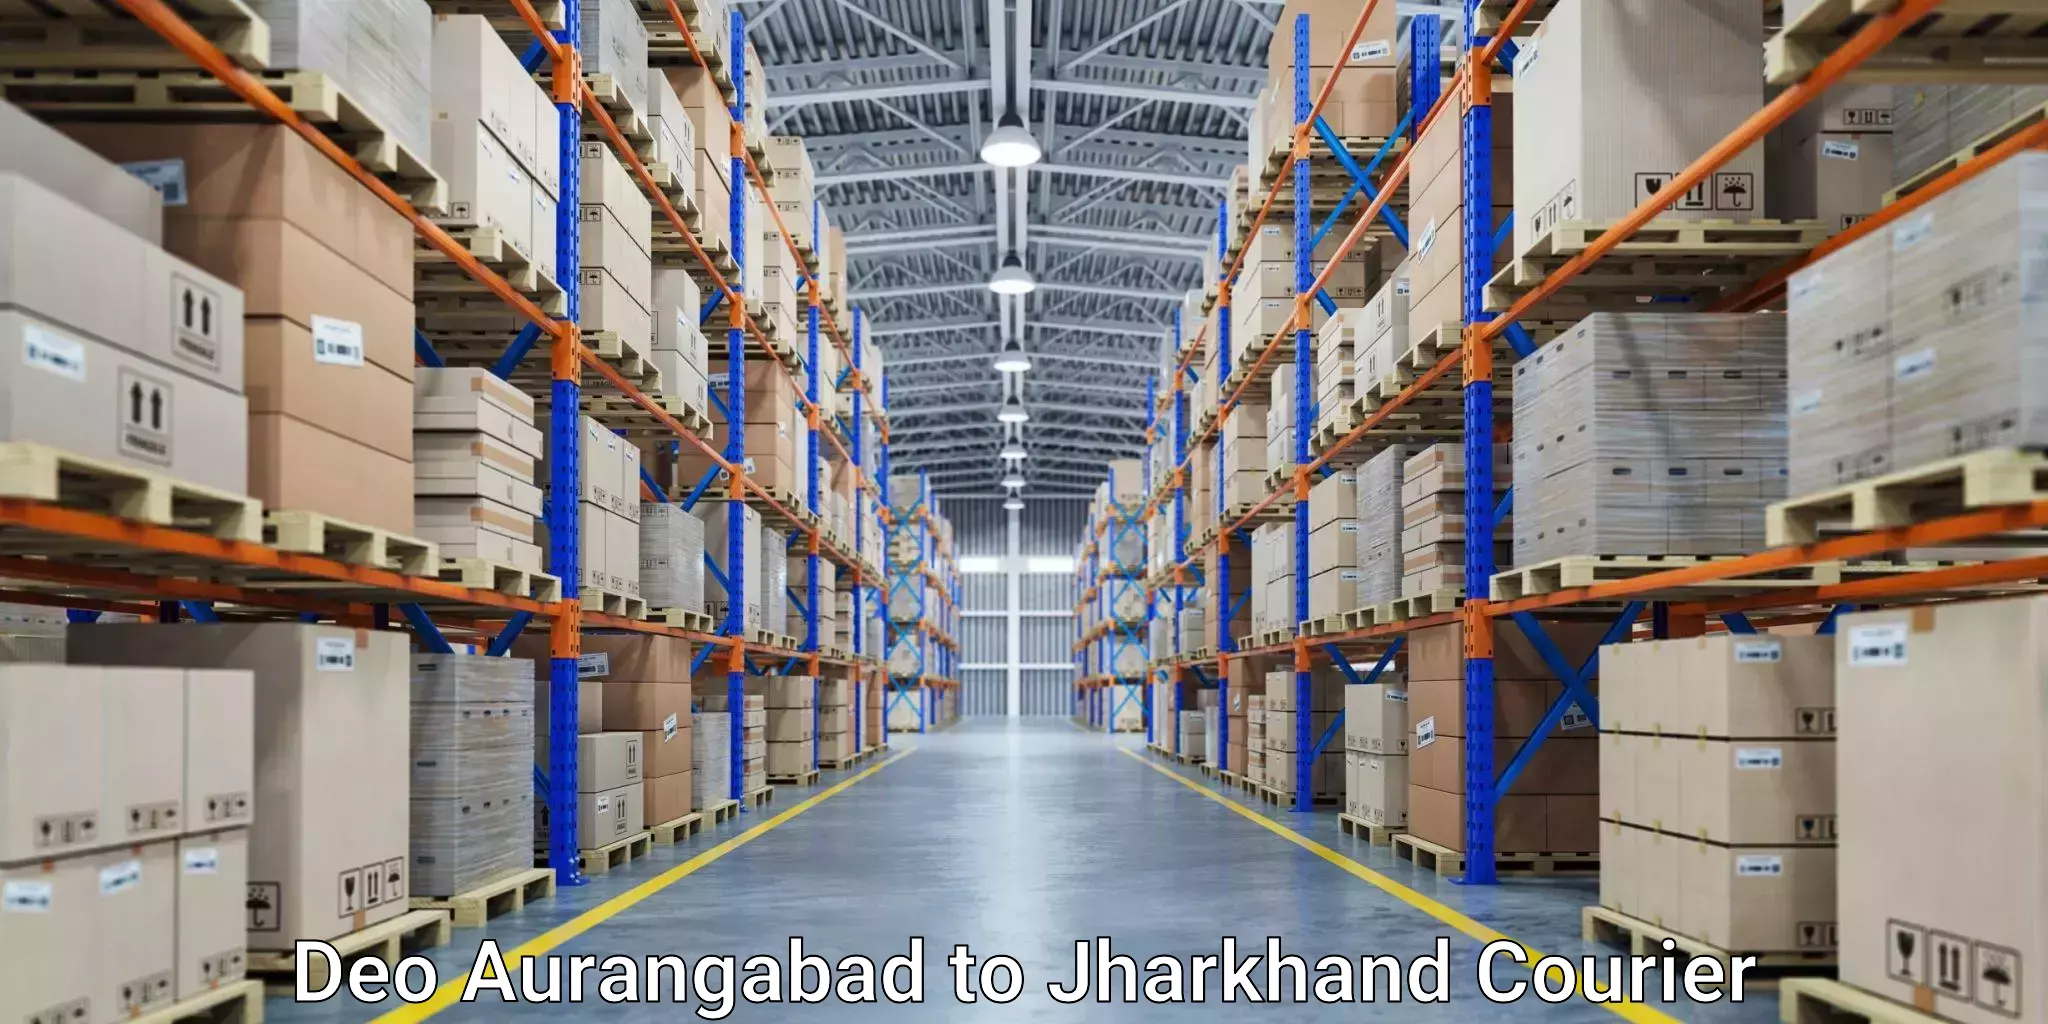 Quick dispatch service Deo Aurangabad to Lohardaga